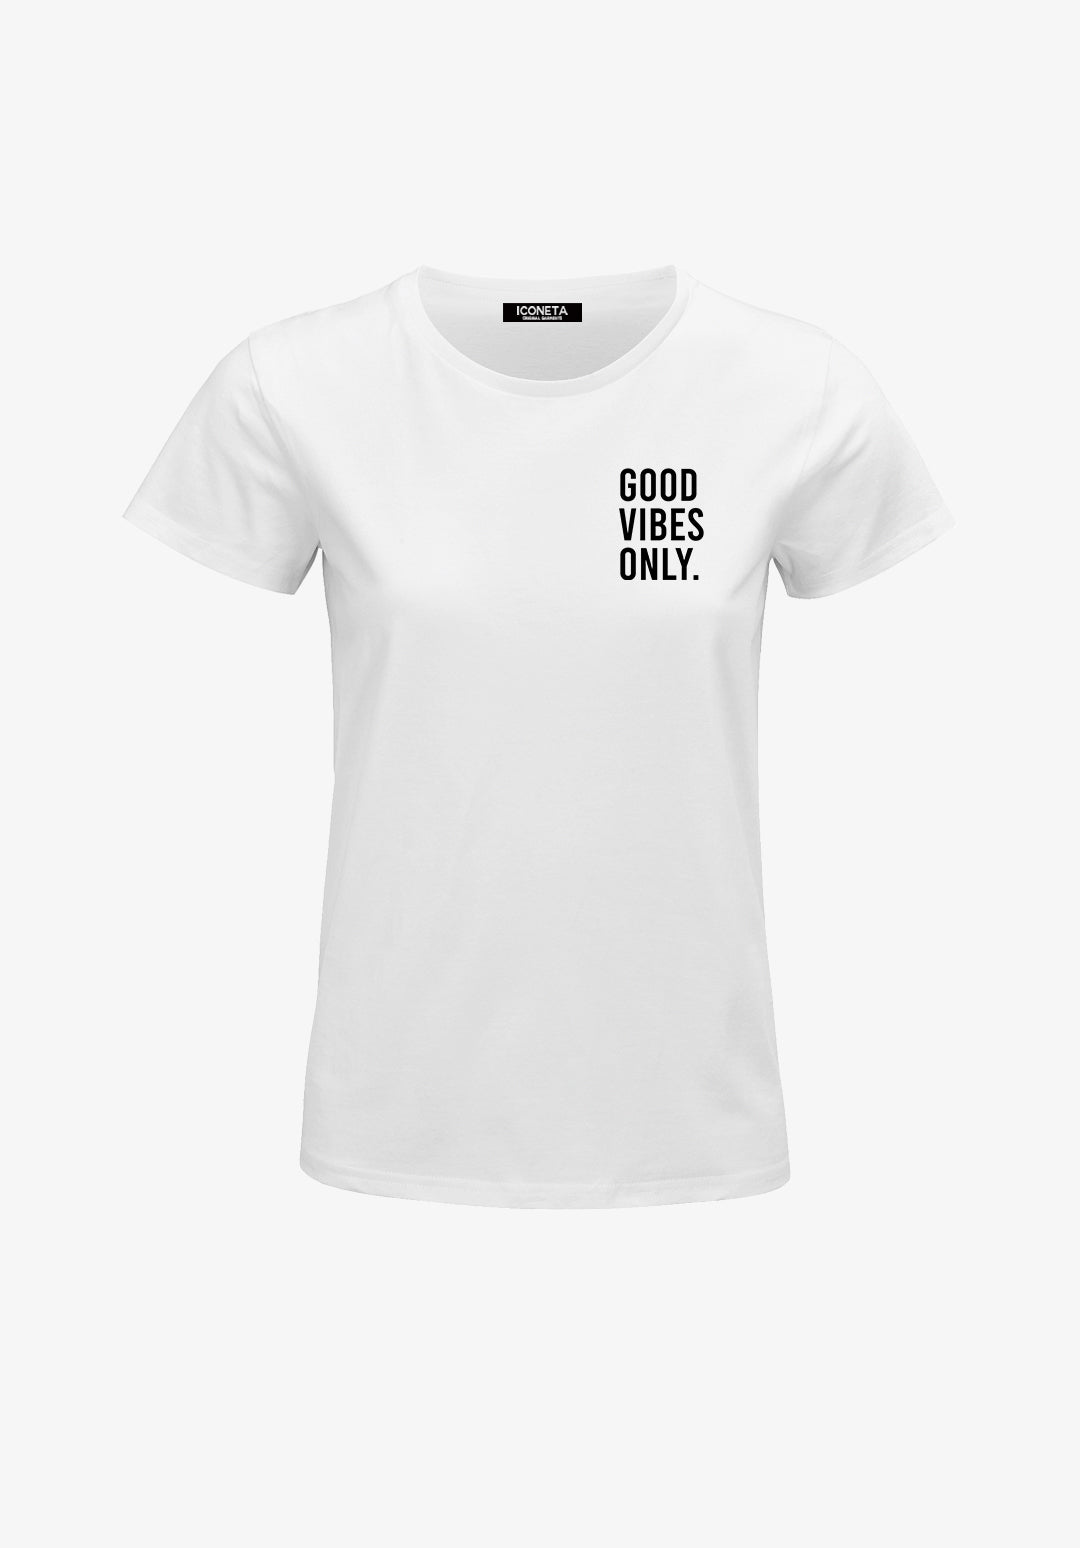 Shirt Iconeta GOOD VIBES ONLY